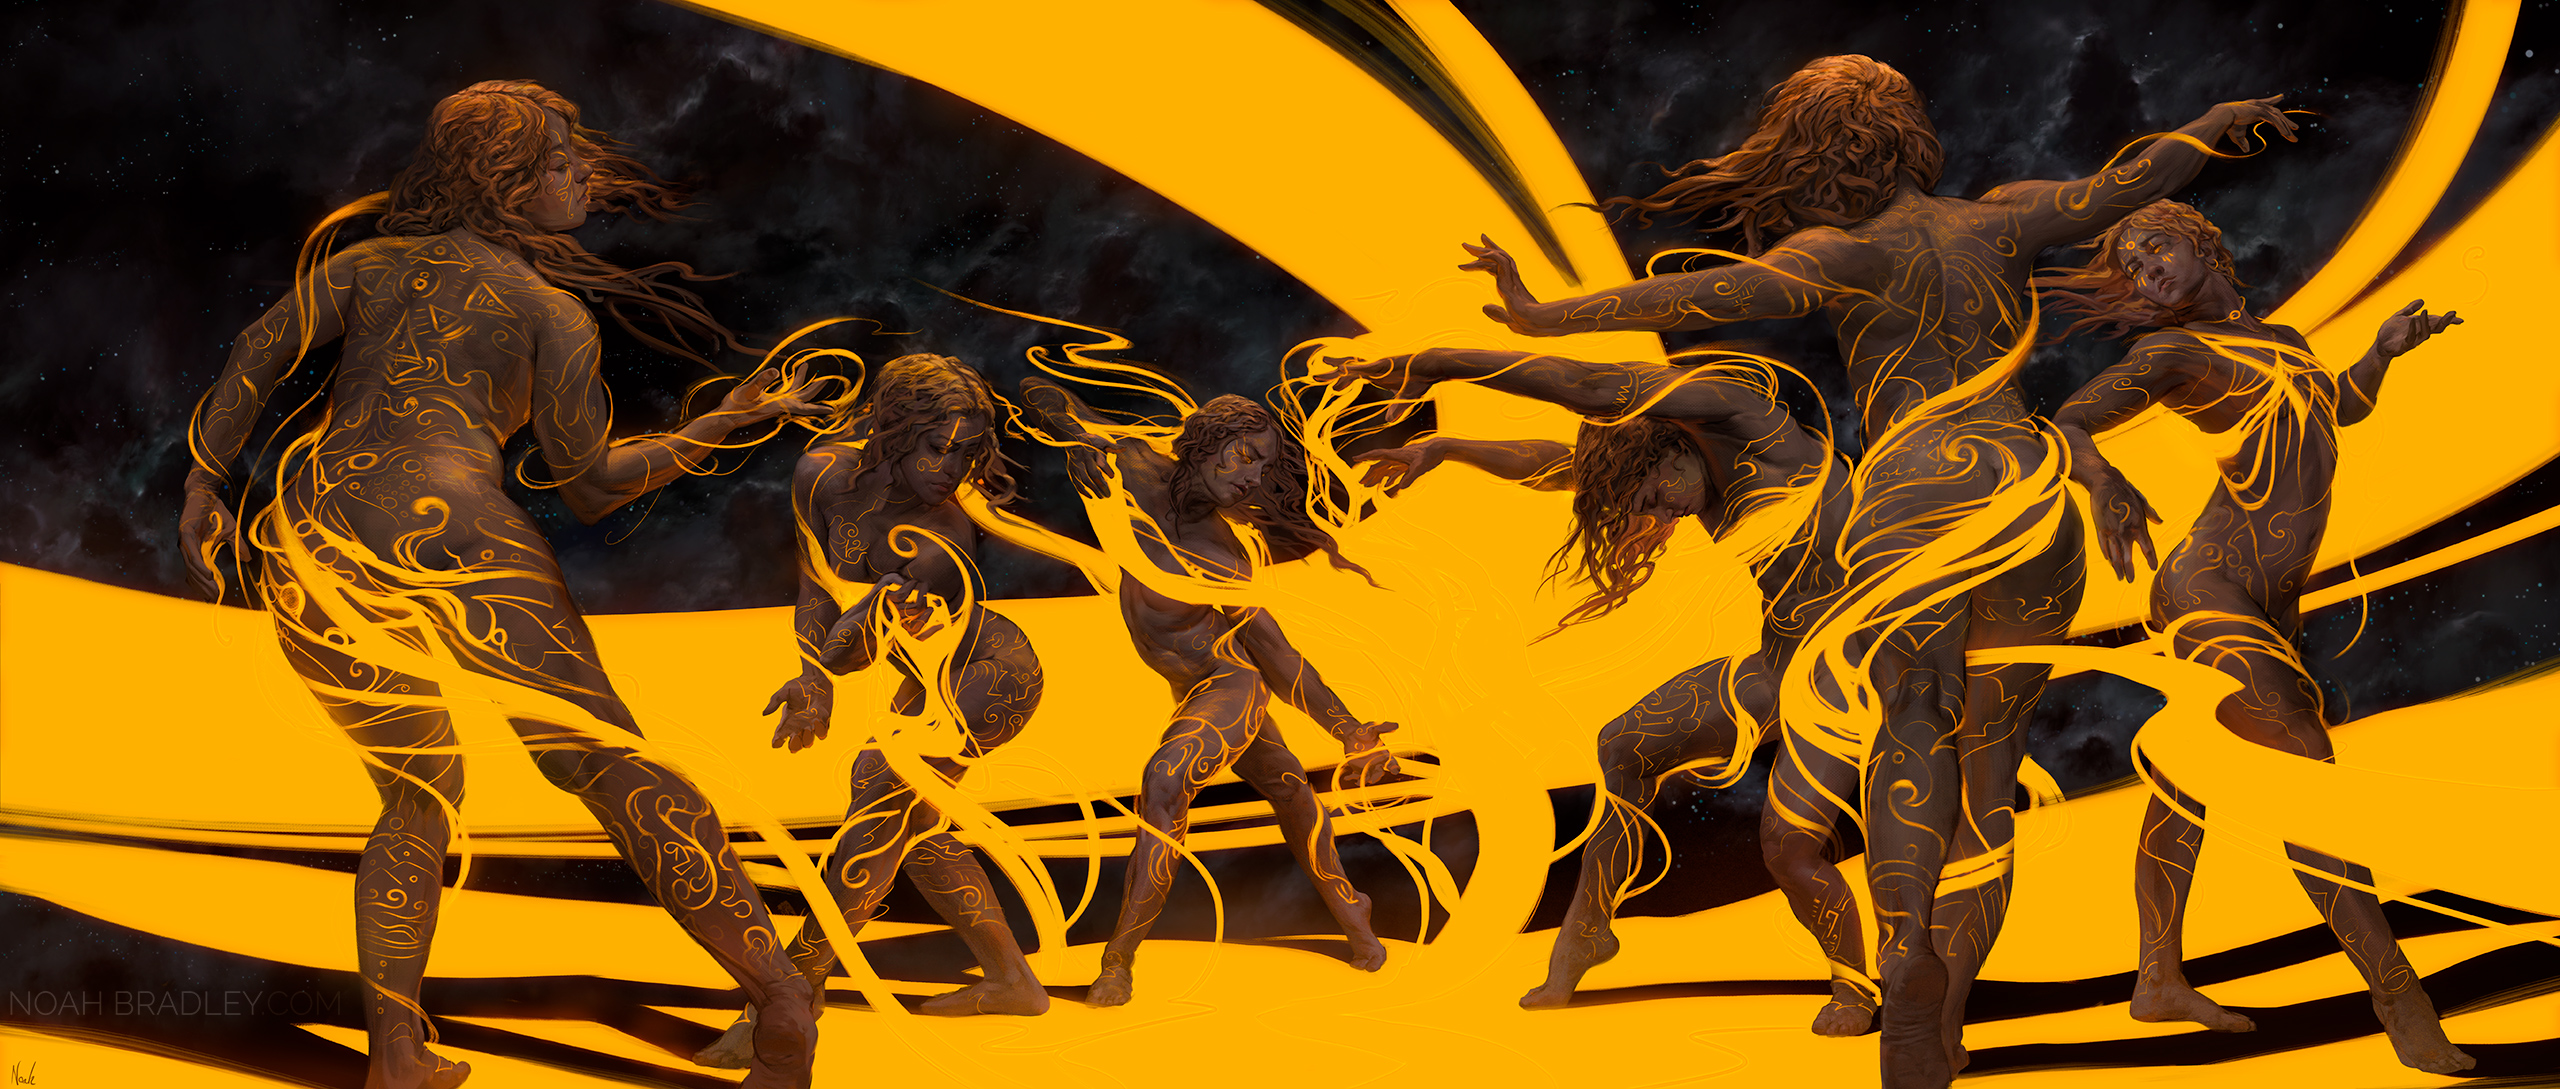 General 2560x1089 Noah Bradley artwork women dancer yellow fantasy girl ritual